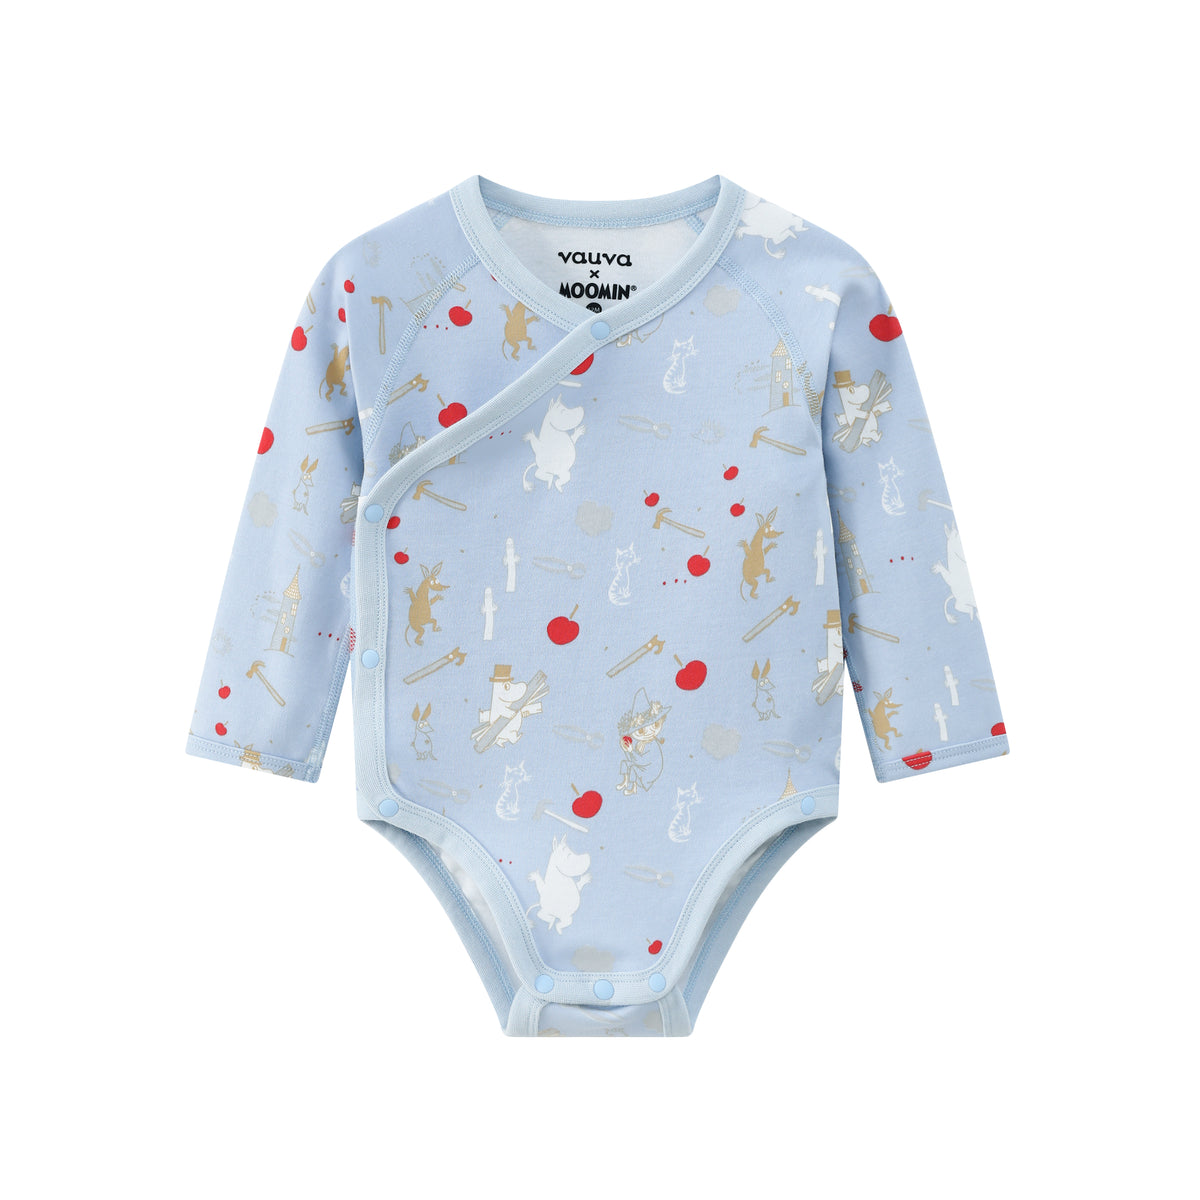 Vauva x Moomin FW23 - Baby Boys Moomin All Over Print Cotton Long Sleeve Bodysuit (Blue) 18 months